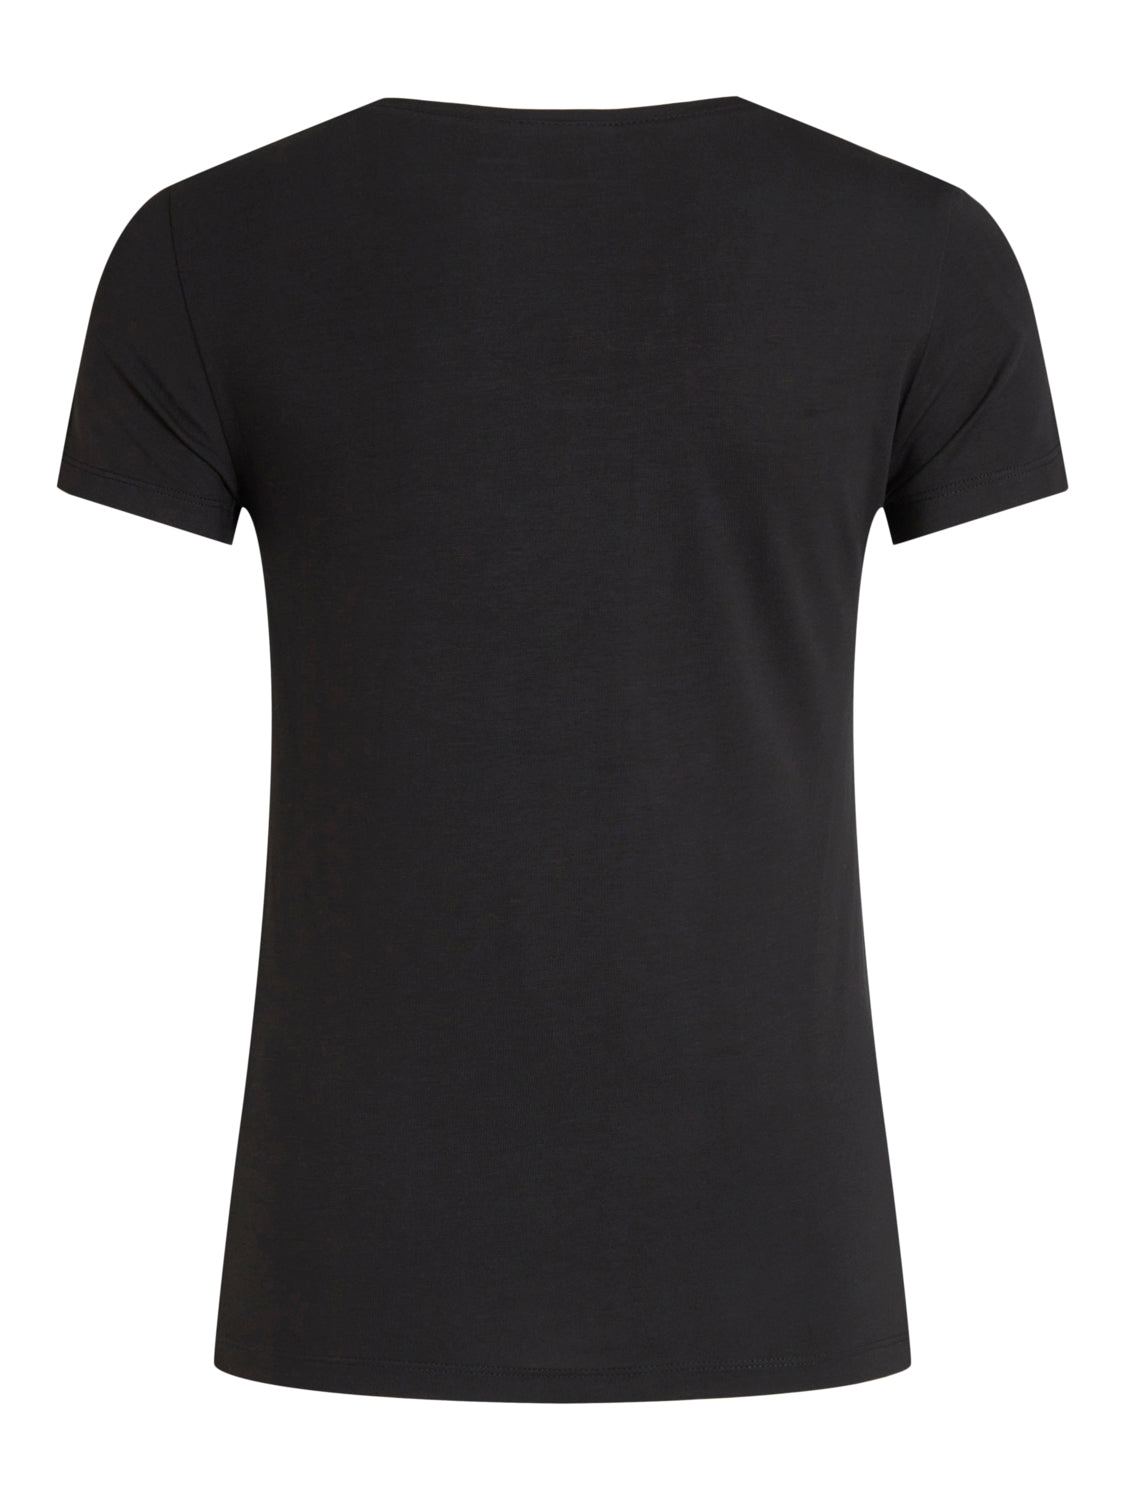 VIDAISY T-Shirt - Black